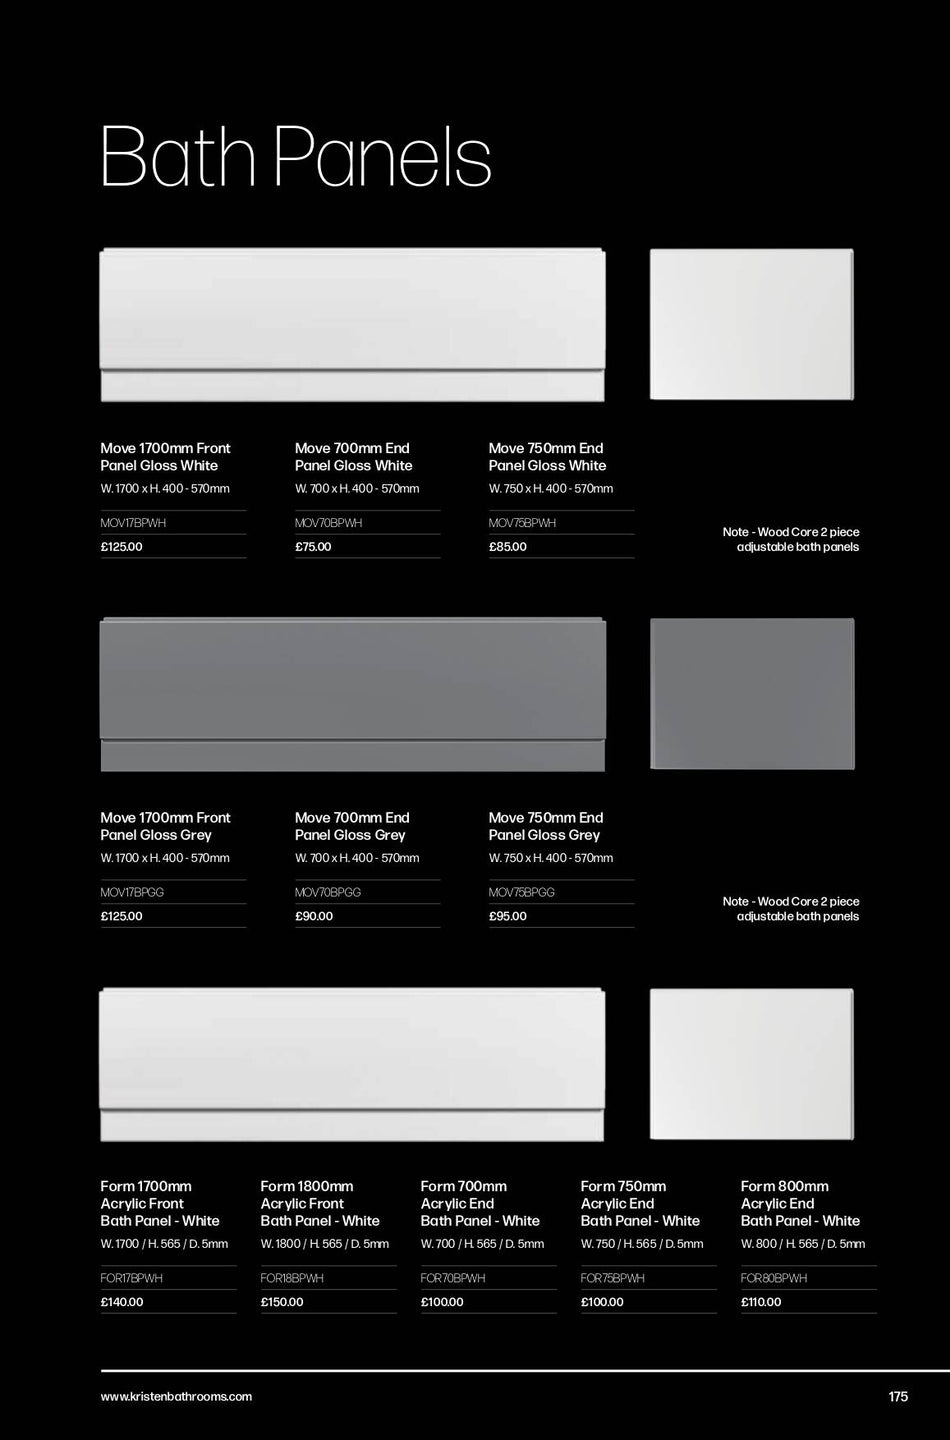 Bath Panels Form 1700mm Acrylic Front Bath Panel - White